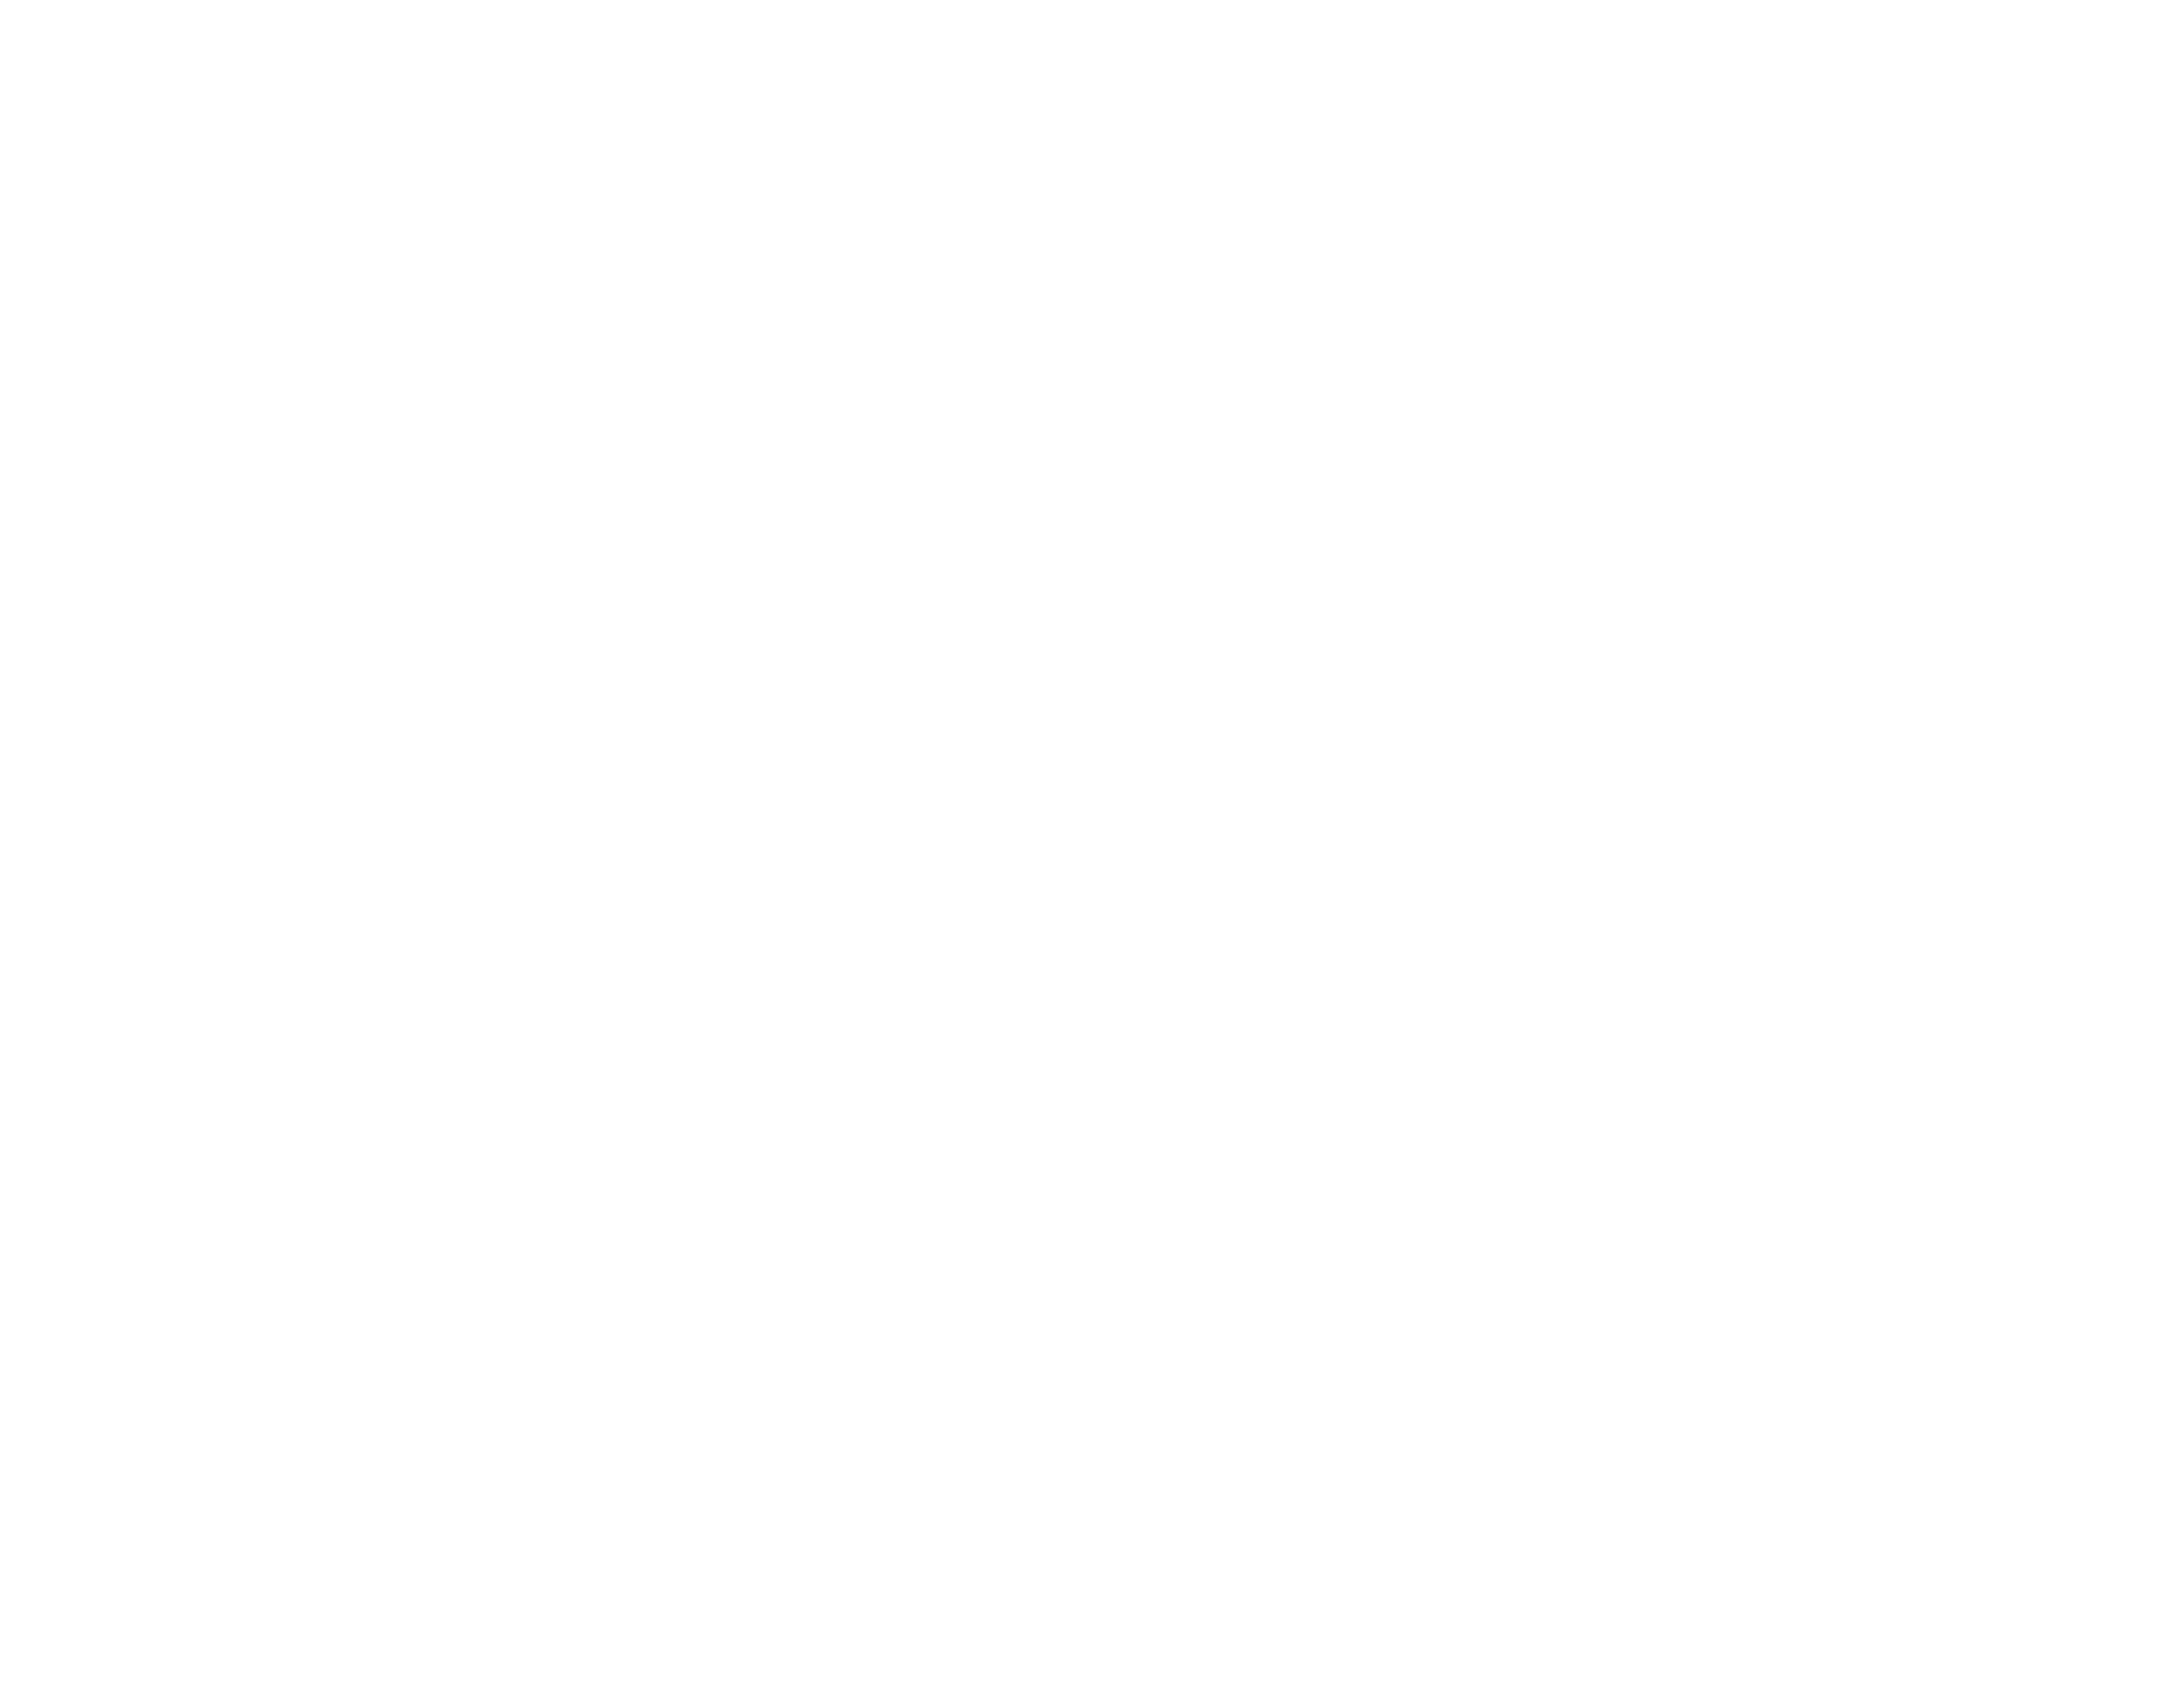 Lockpick Extreme